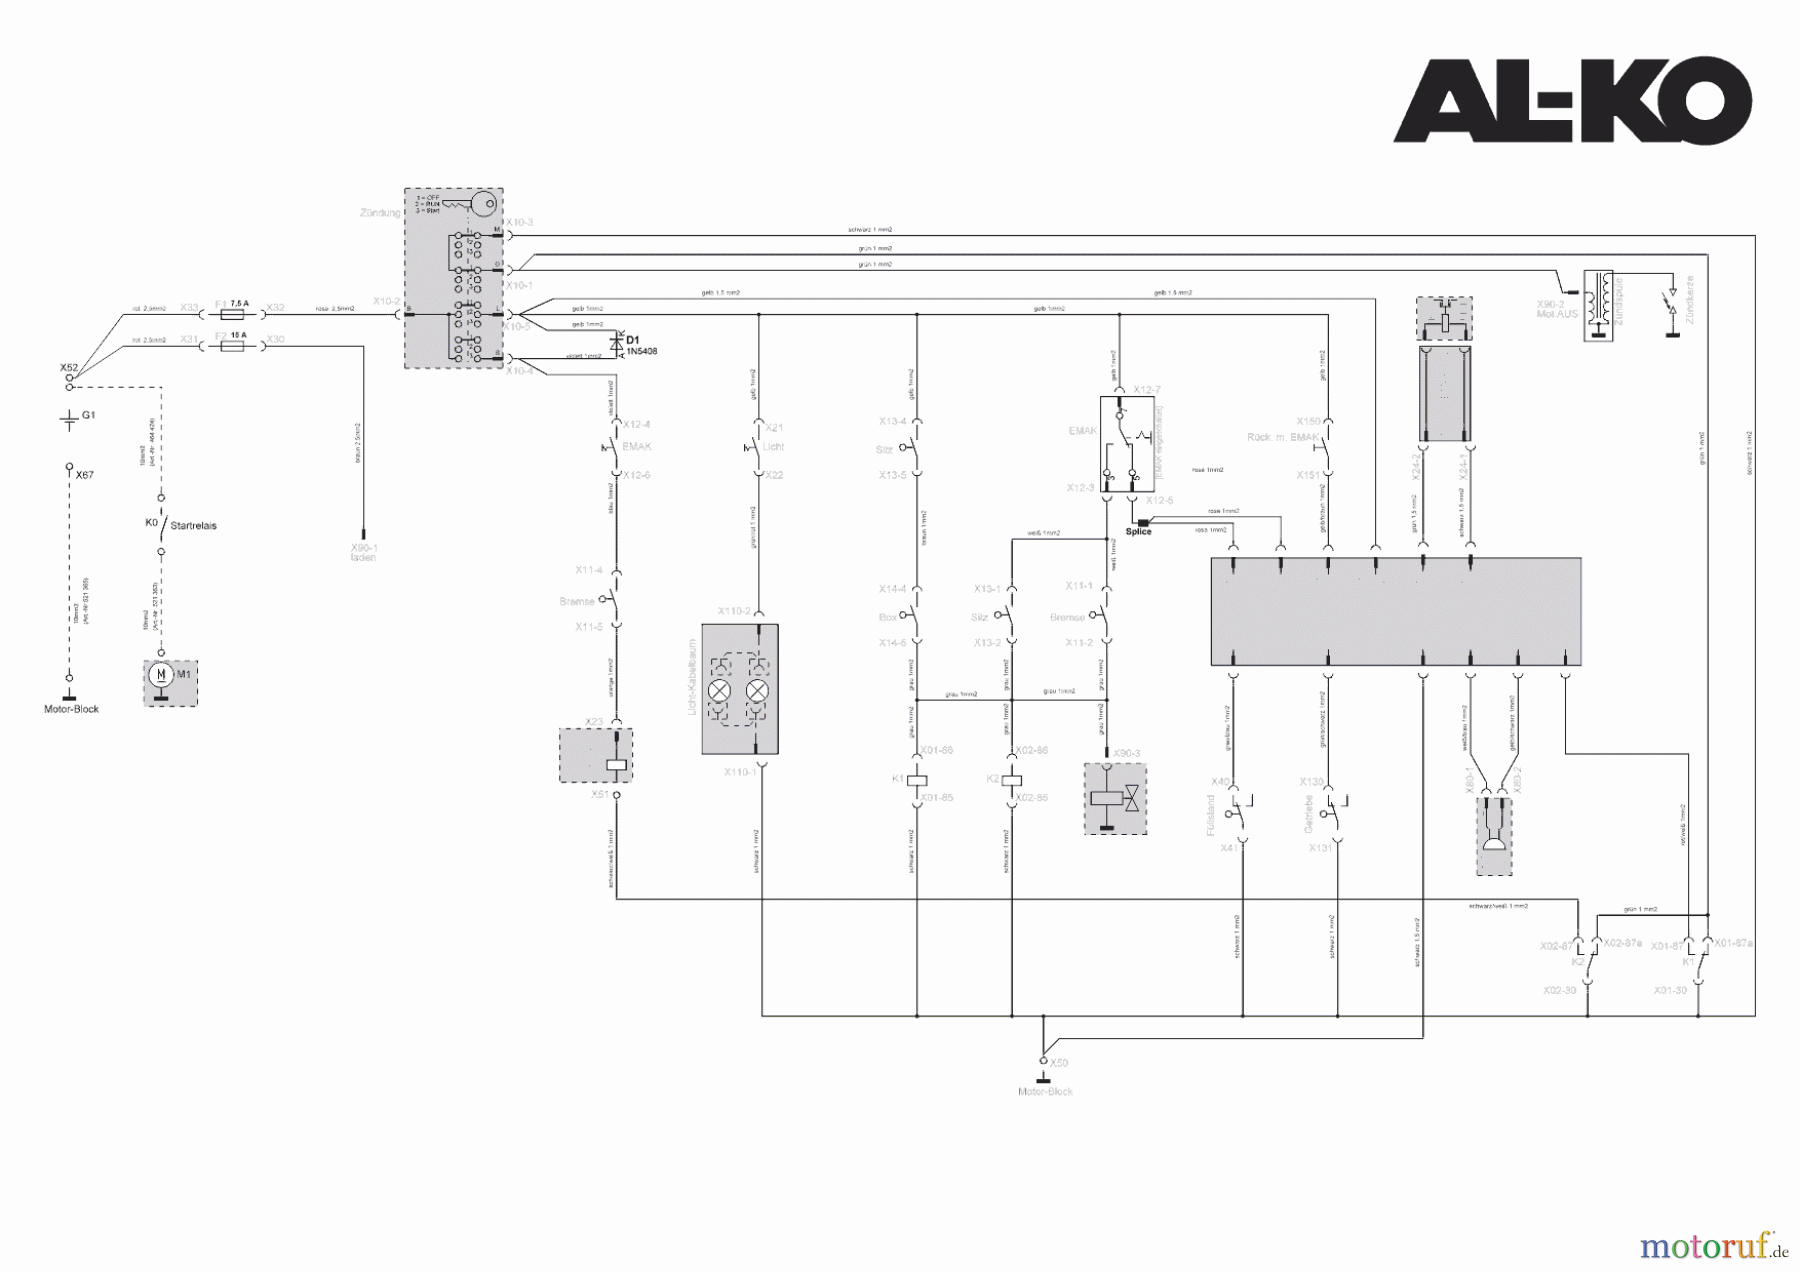  AL-KO Gartentechnik Rasentraktor T16-92 HD EDITION  03/2015 - 07/2015 Seite 11